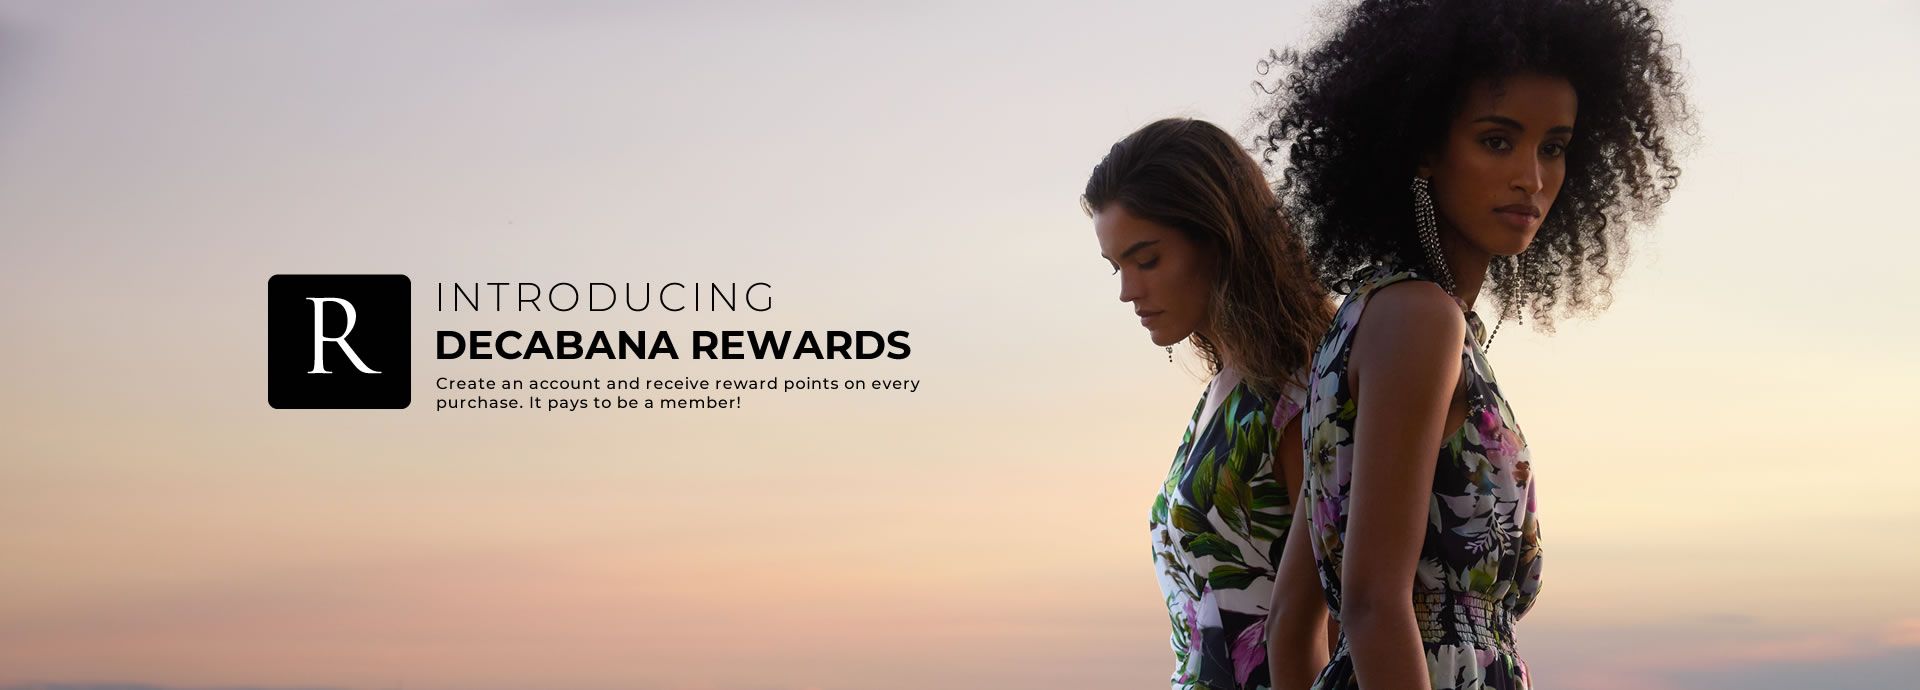 Decabana Rewards